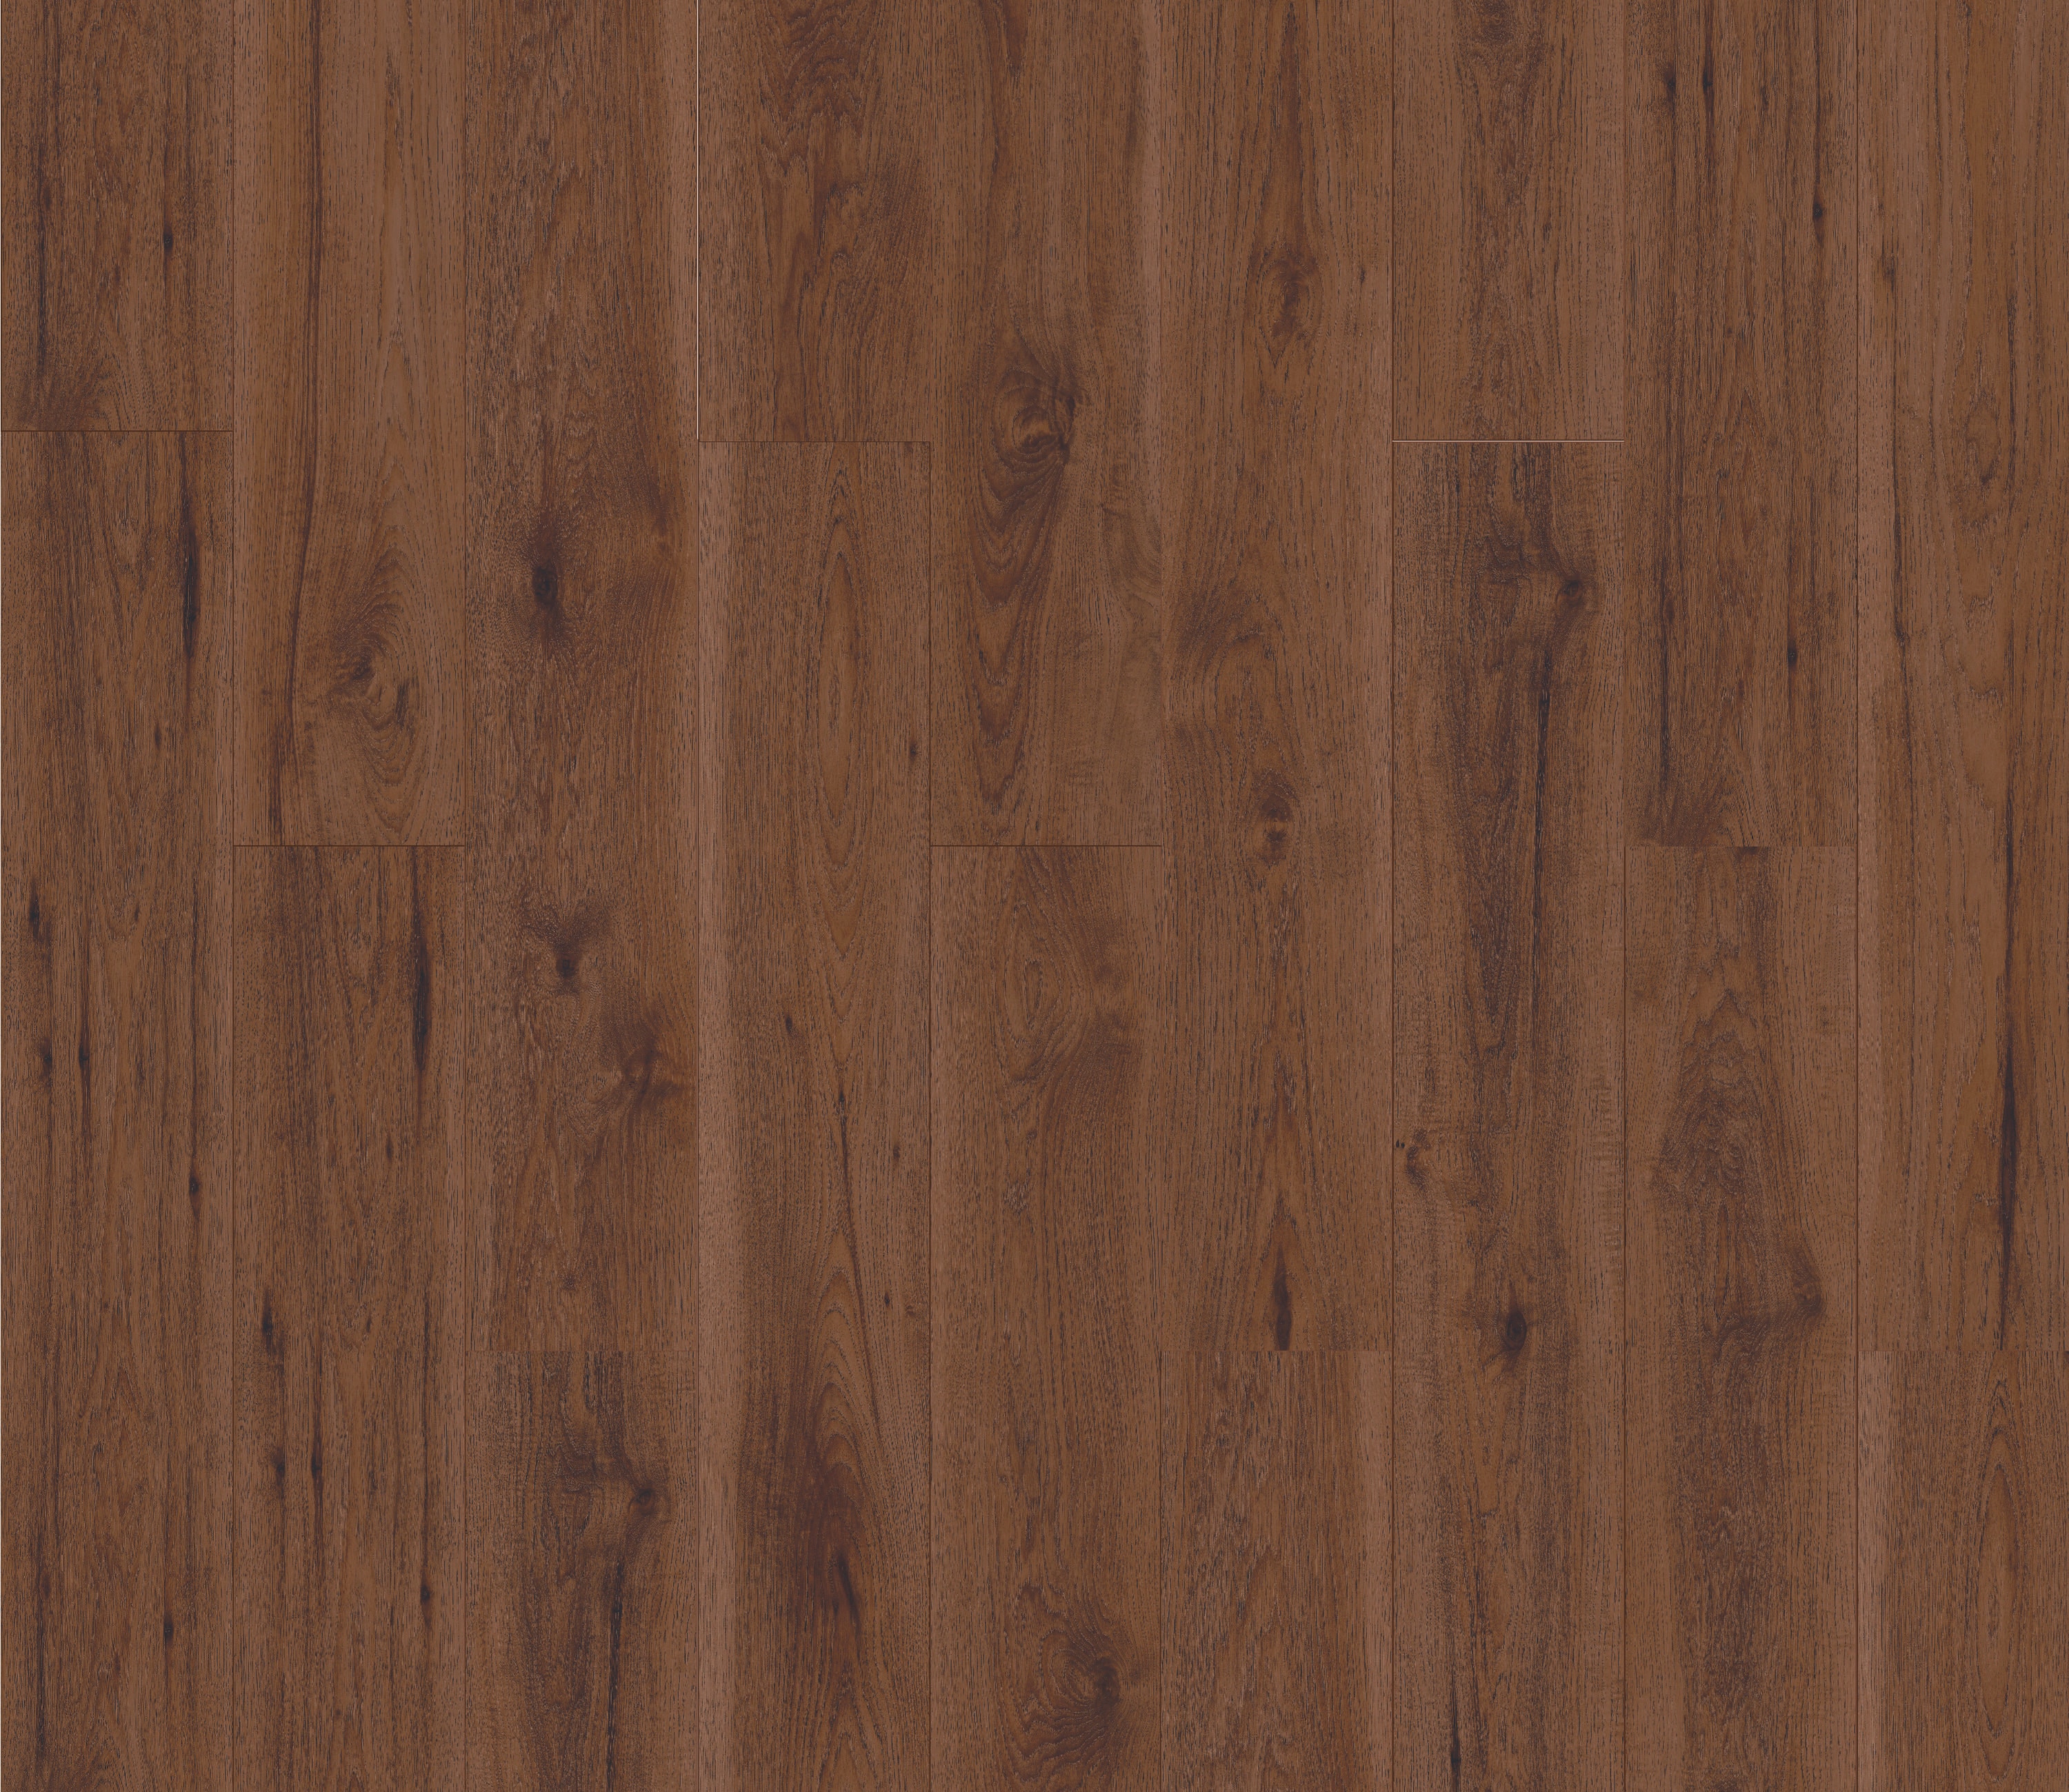 (Sample) Adeline Hickory Laminate Flooring in Brown | - allen + roth 370831-85581